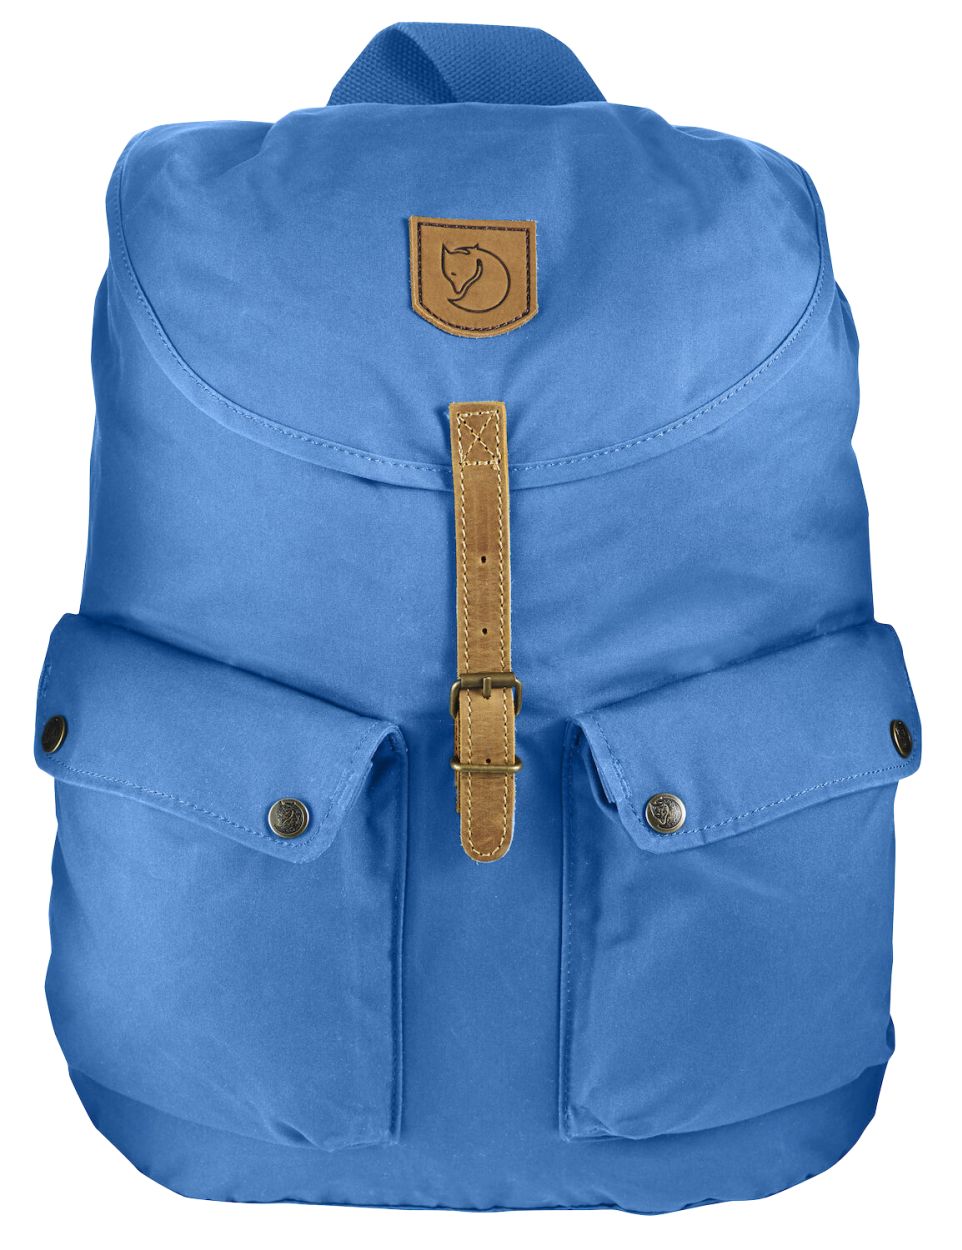 Greenland Backpack Large